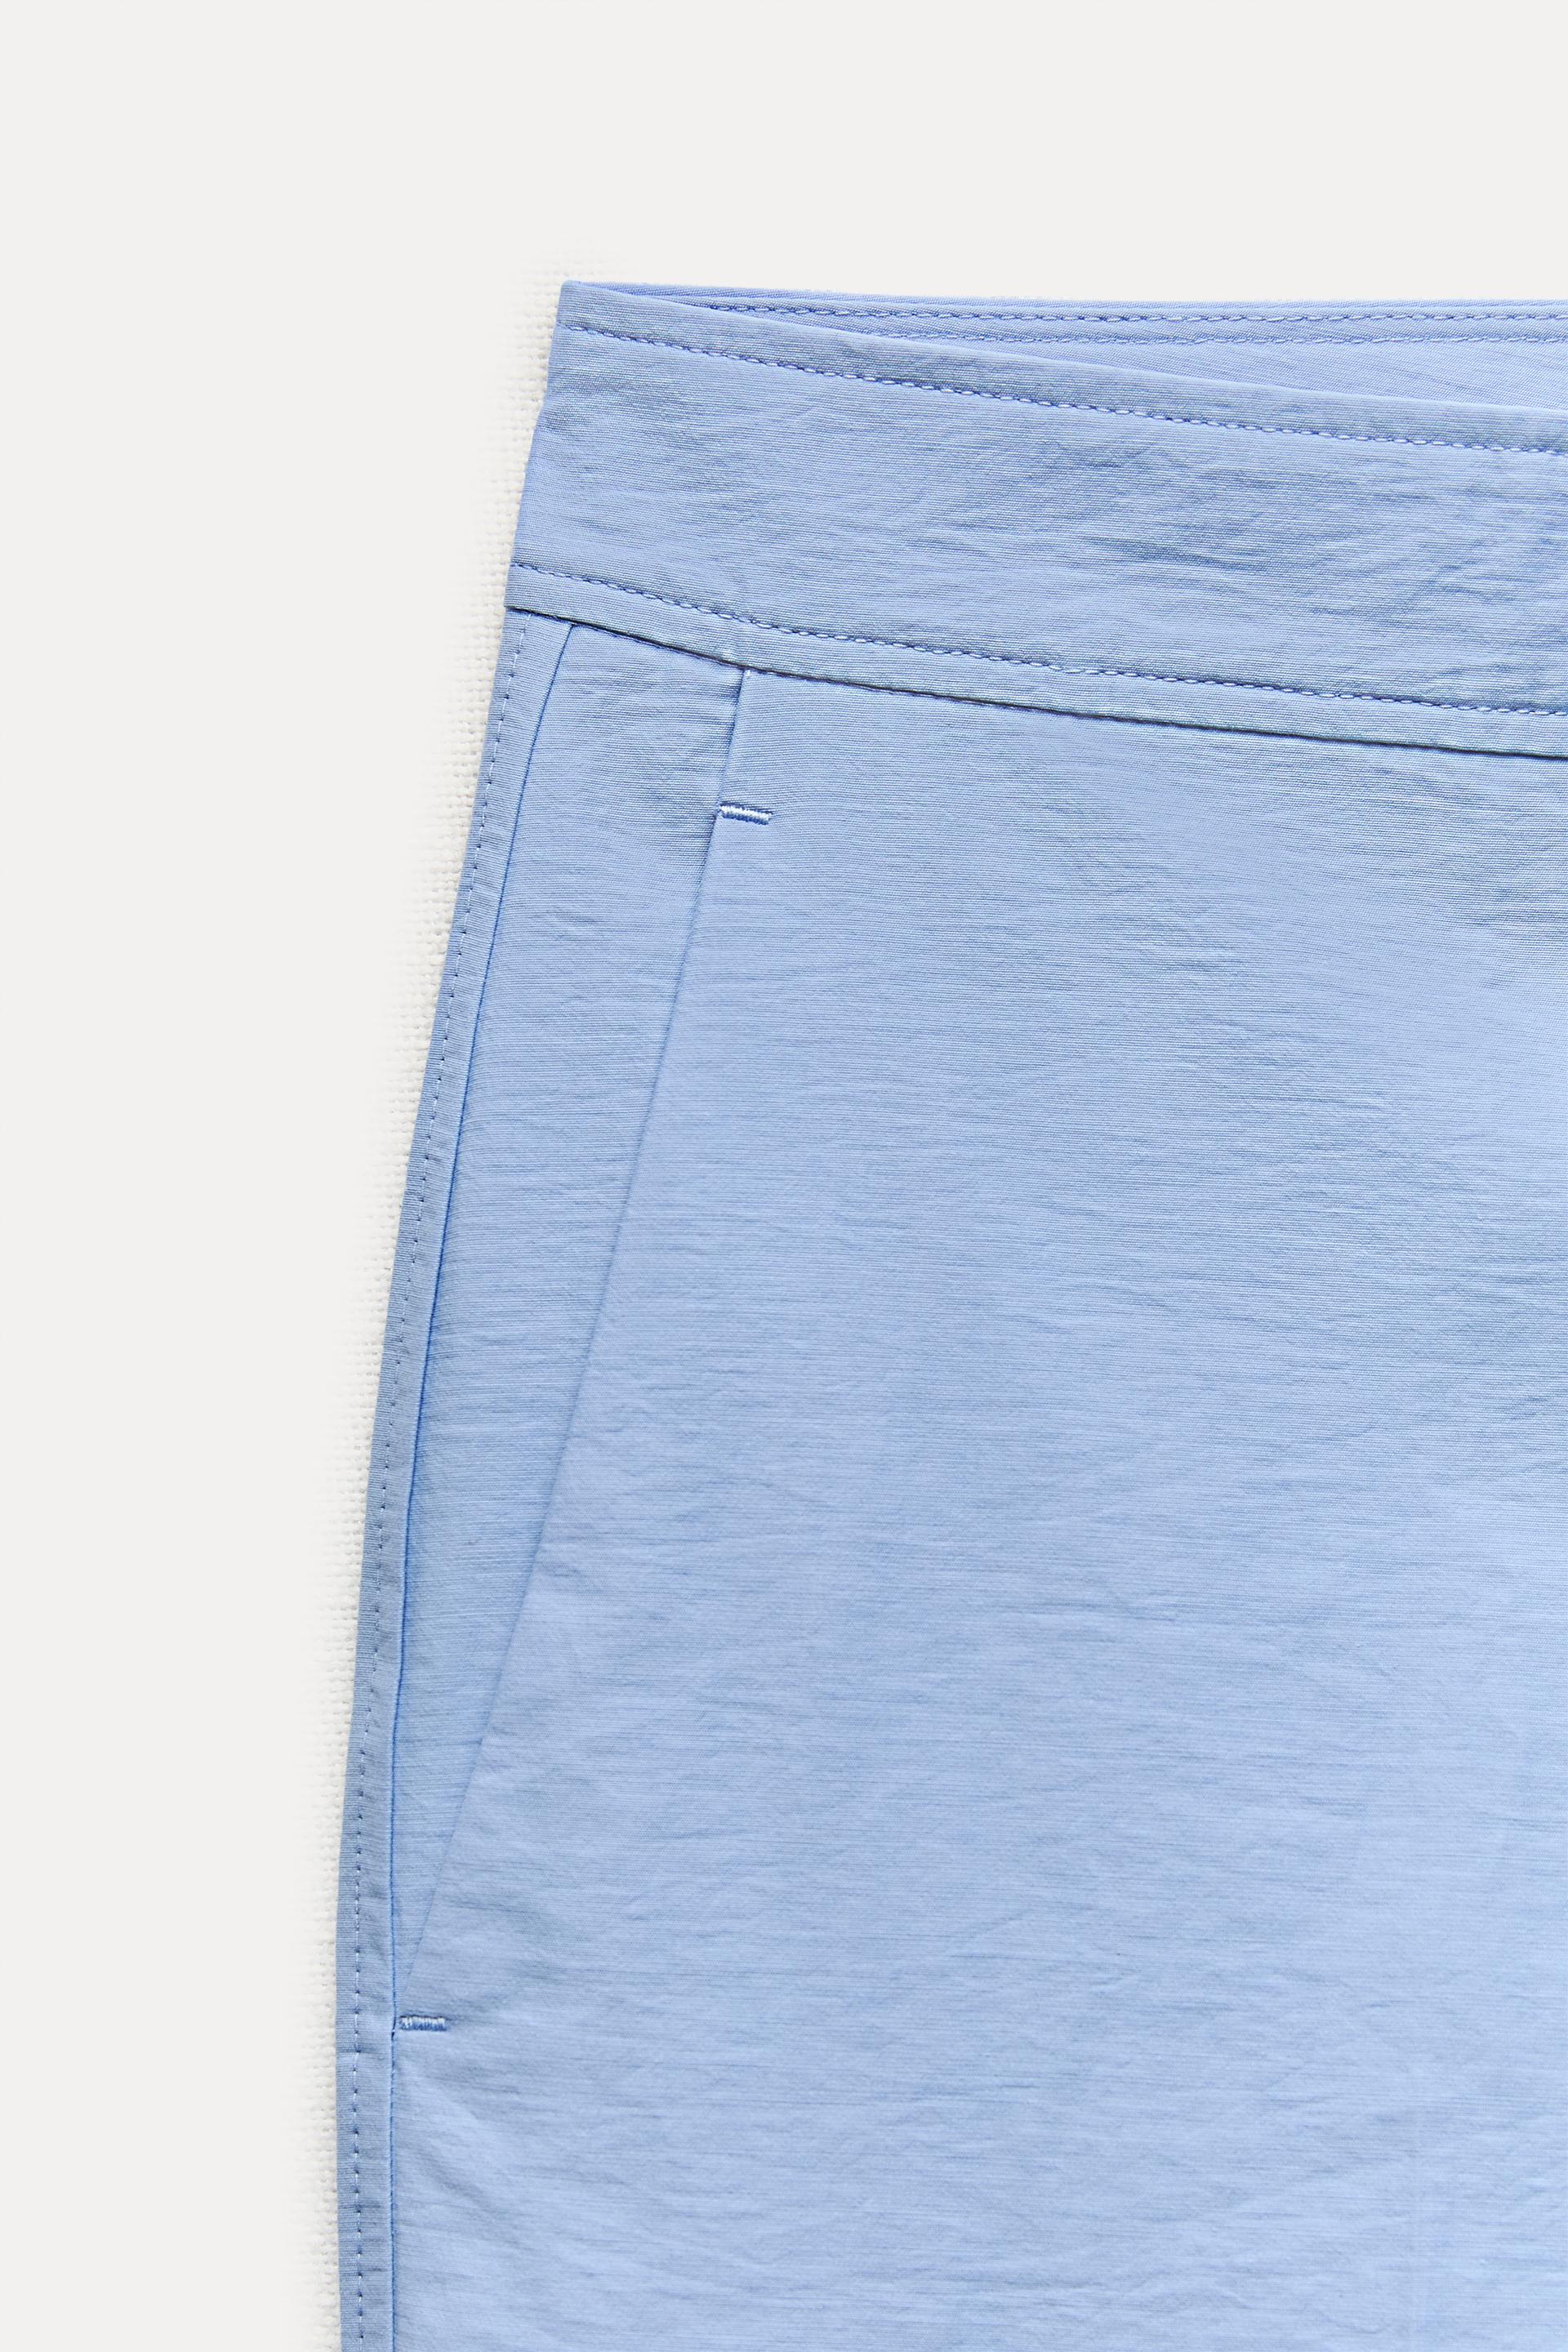 ZARA Small High Waisted Straight Cut Pants - Blue/steel Blue - $65